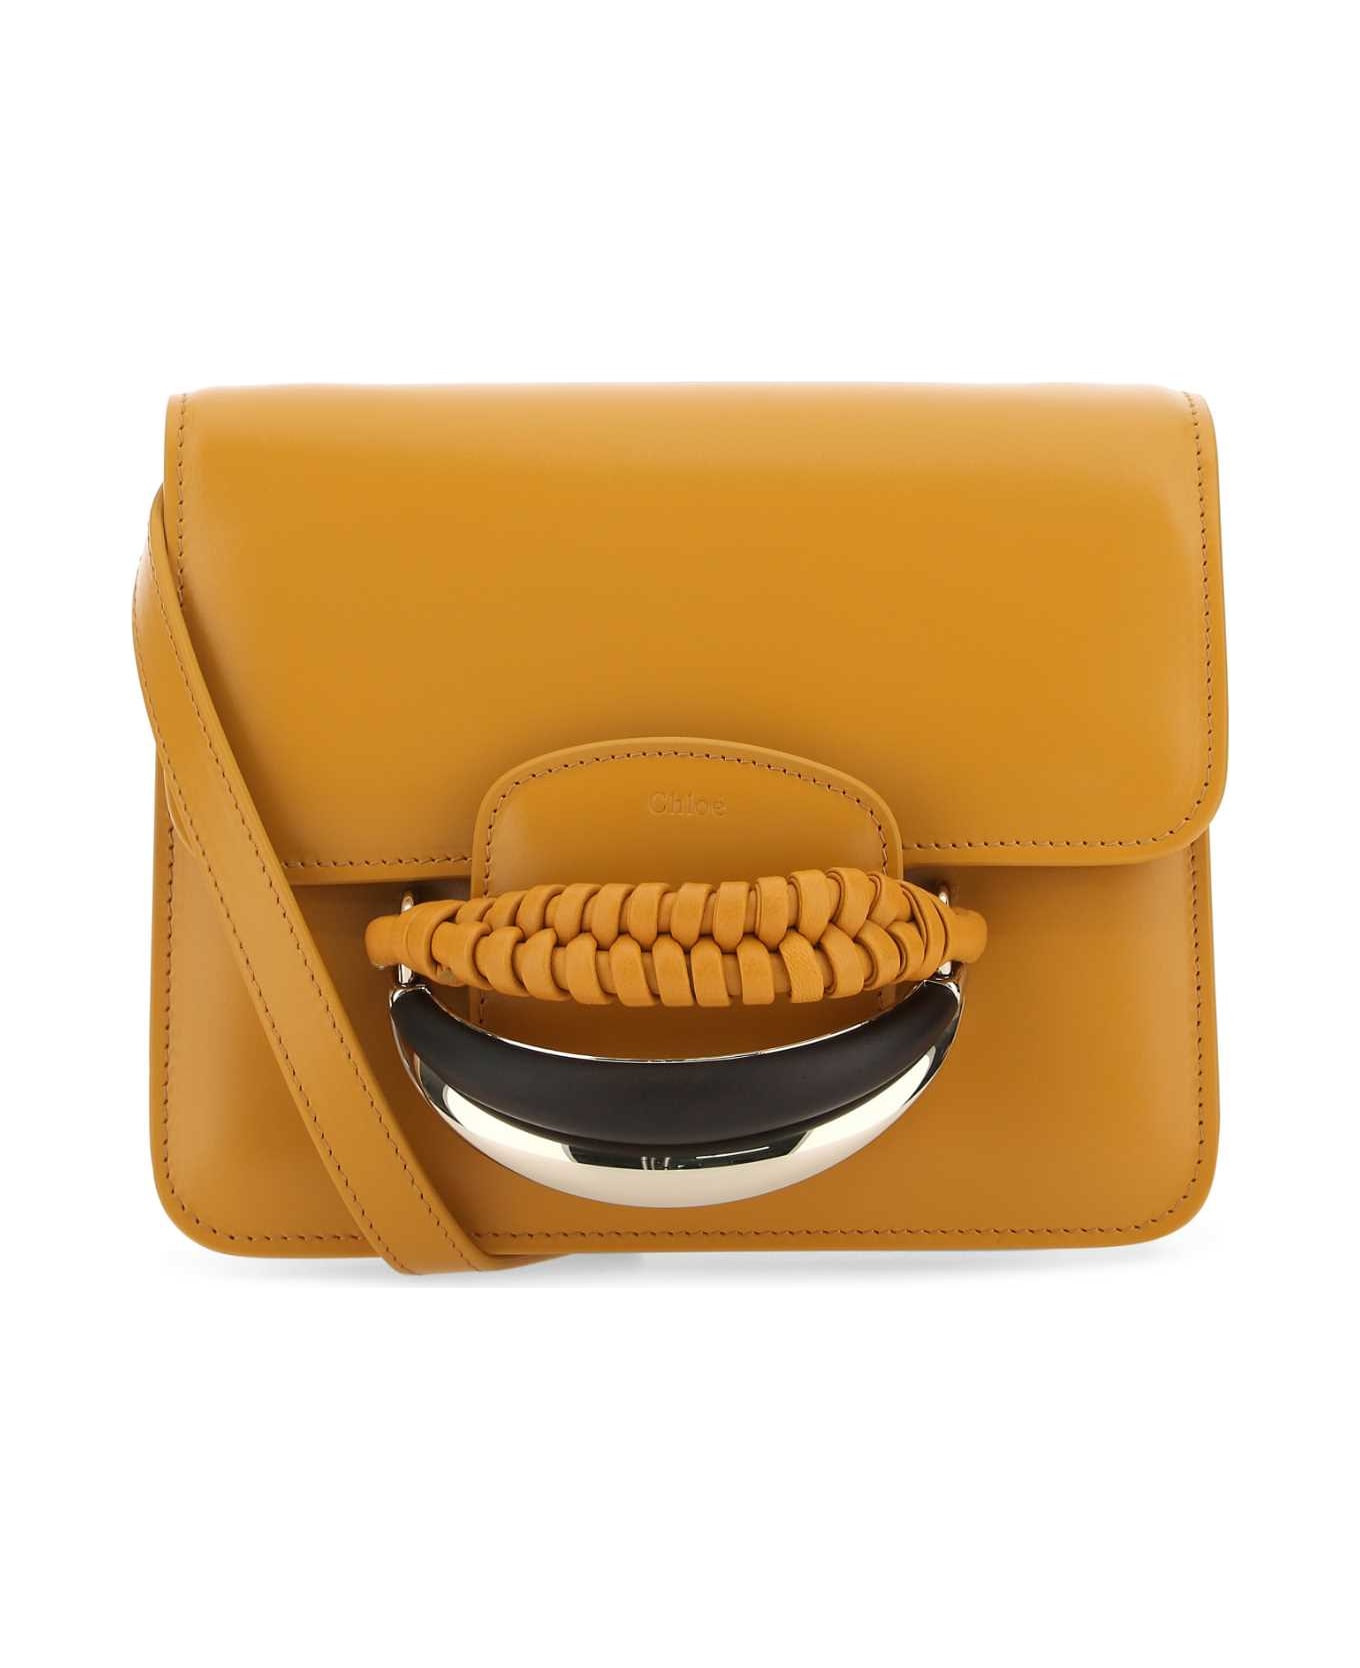 Chloé Mustard Leather Kattie Clutch - 216